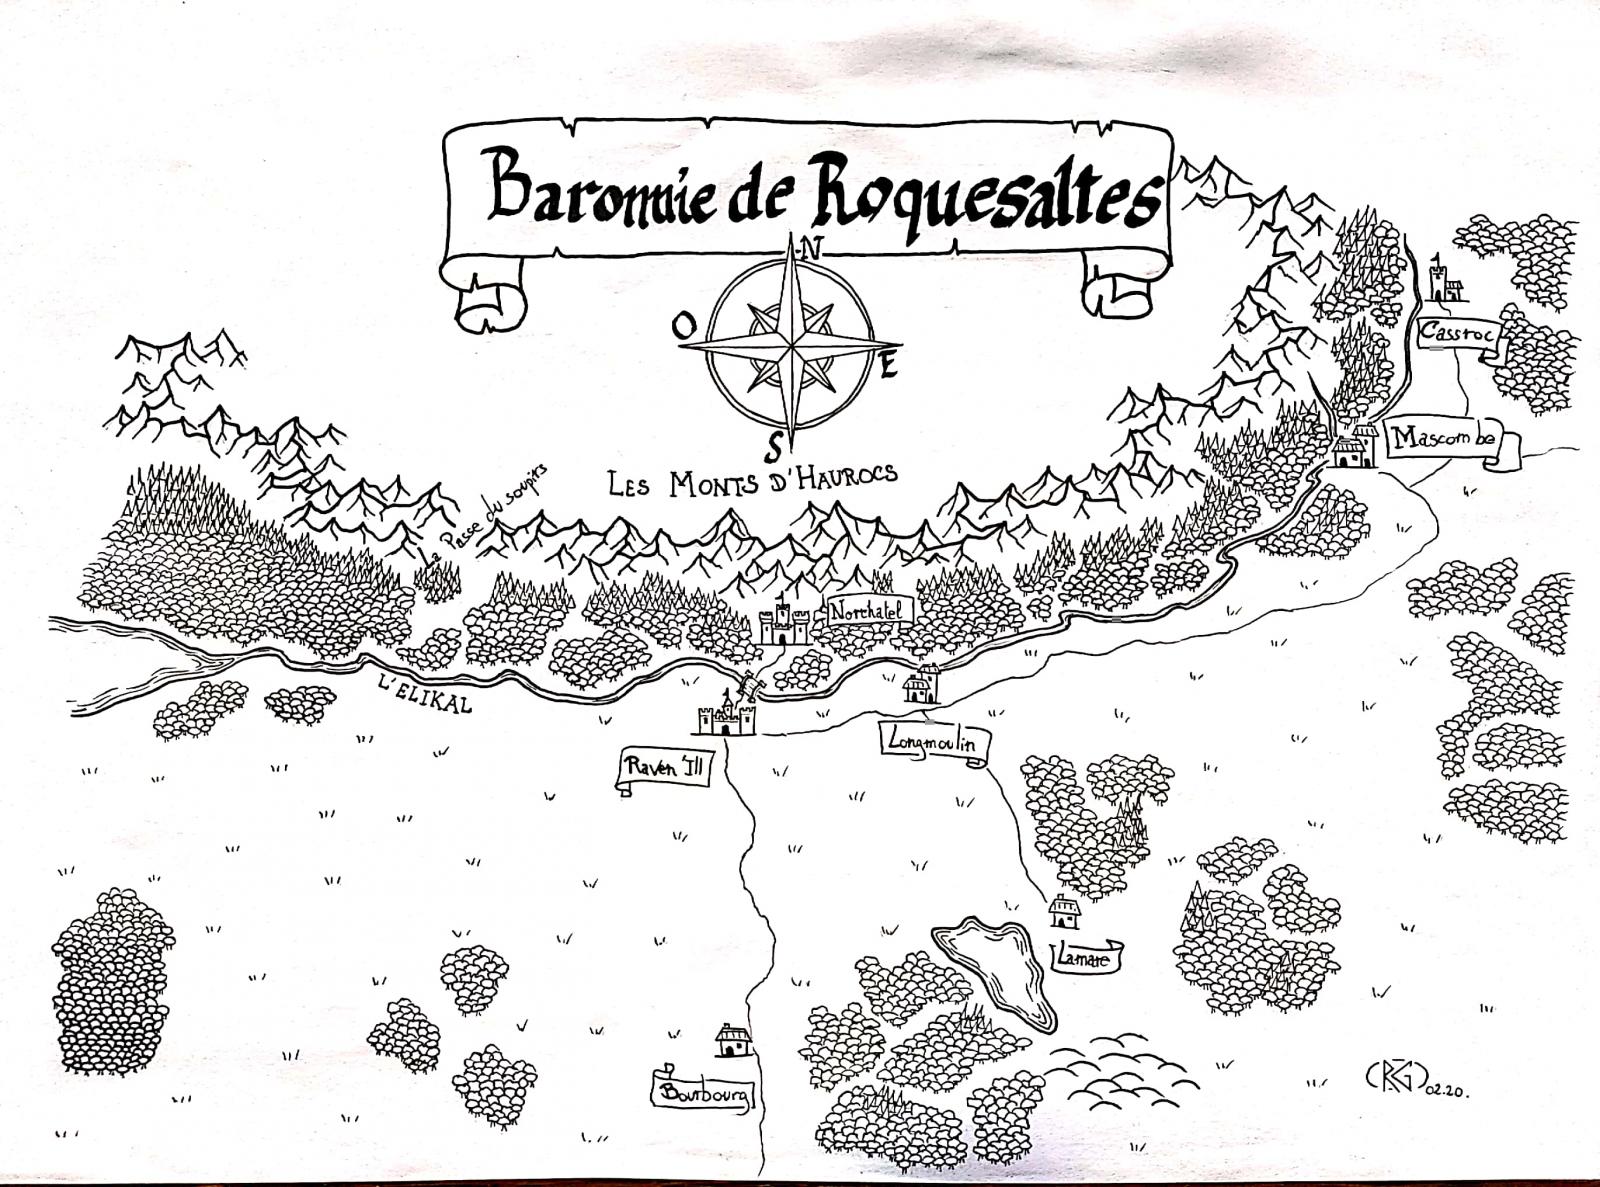 La Baronnie de Roquesaltes